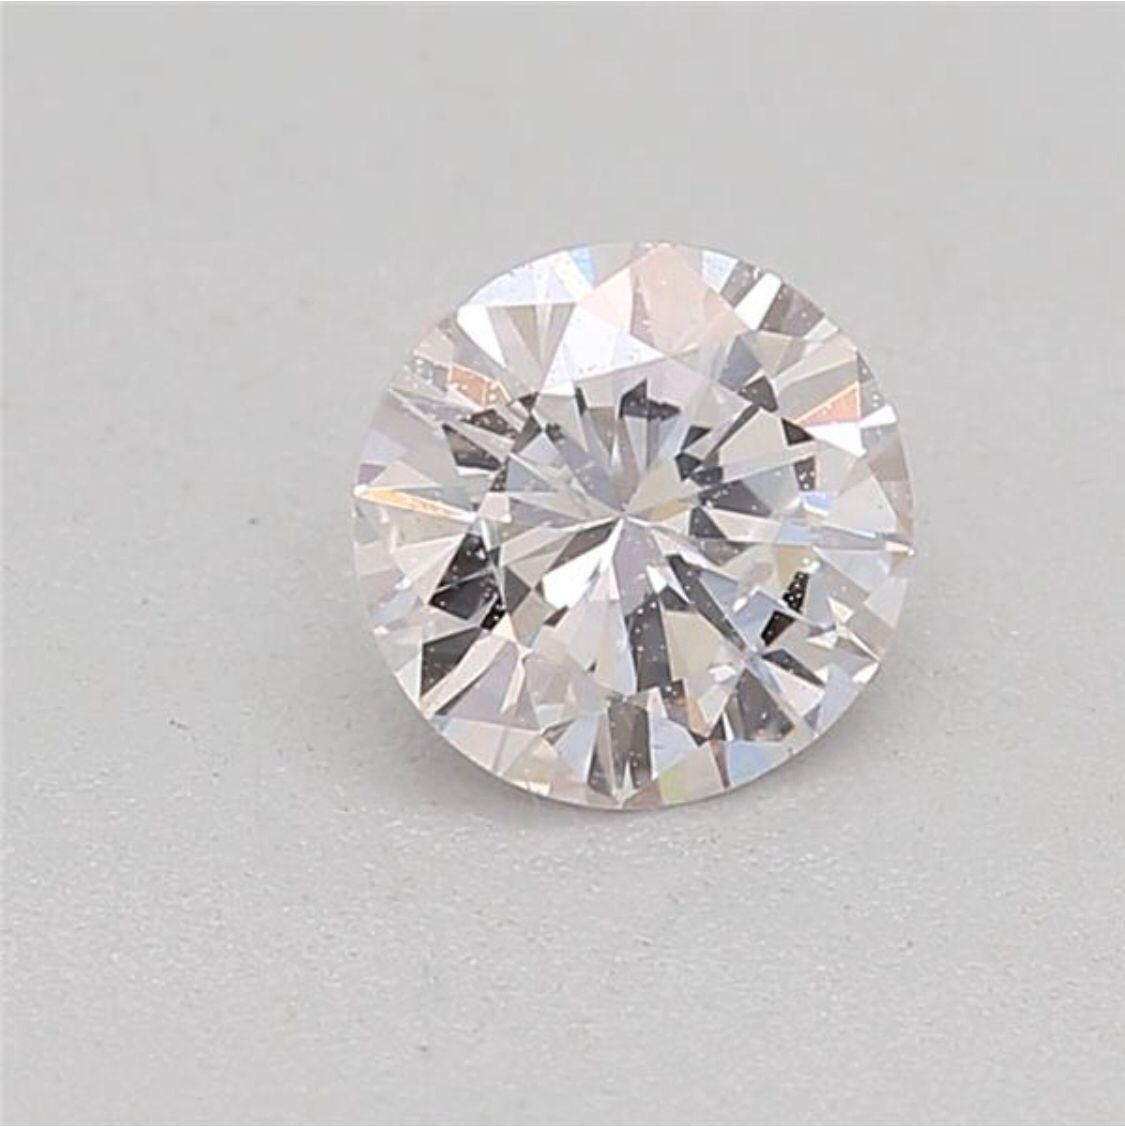 Taille ronde Diamant rose pâle taille ronde de 0,31 carat de pureté SI1 certifié CGL en vente